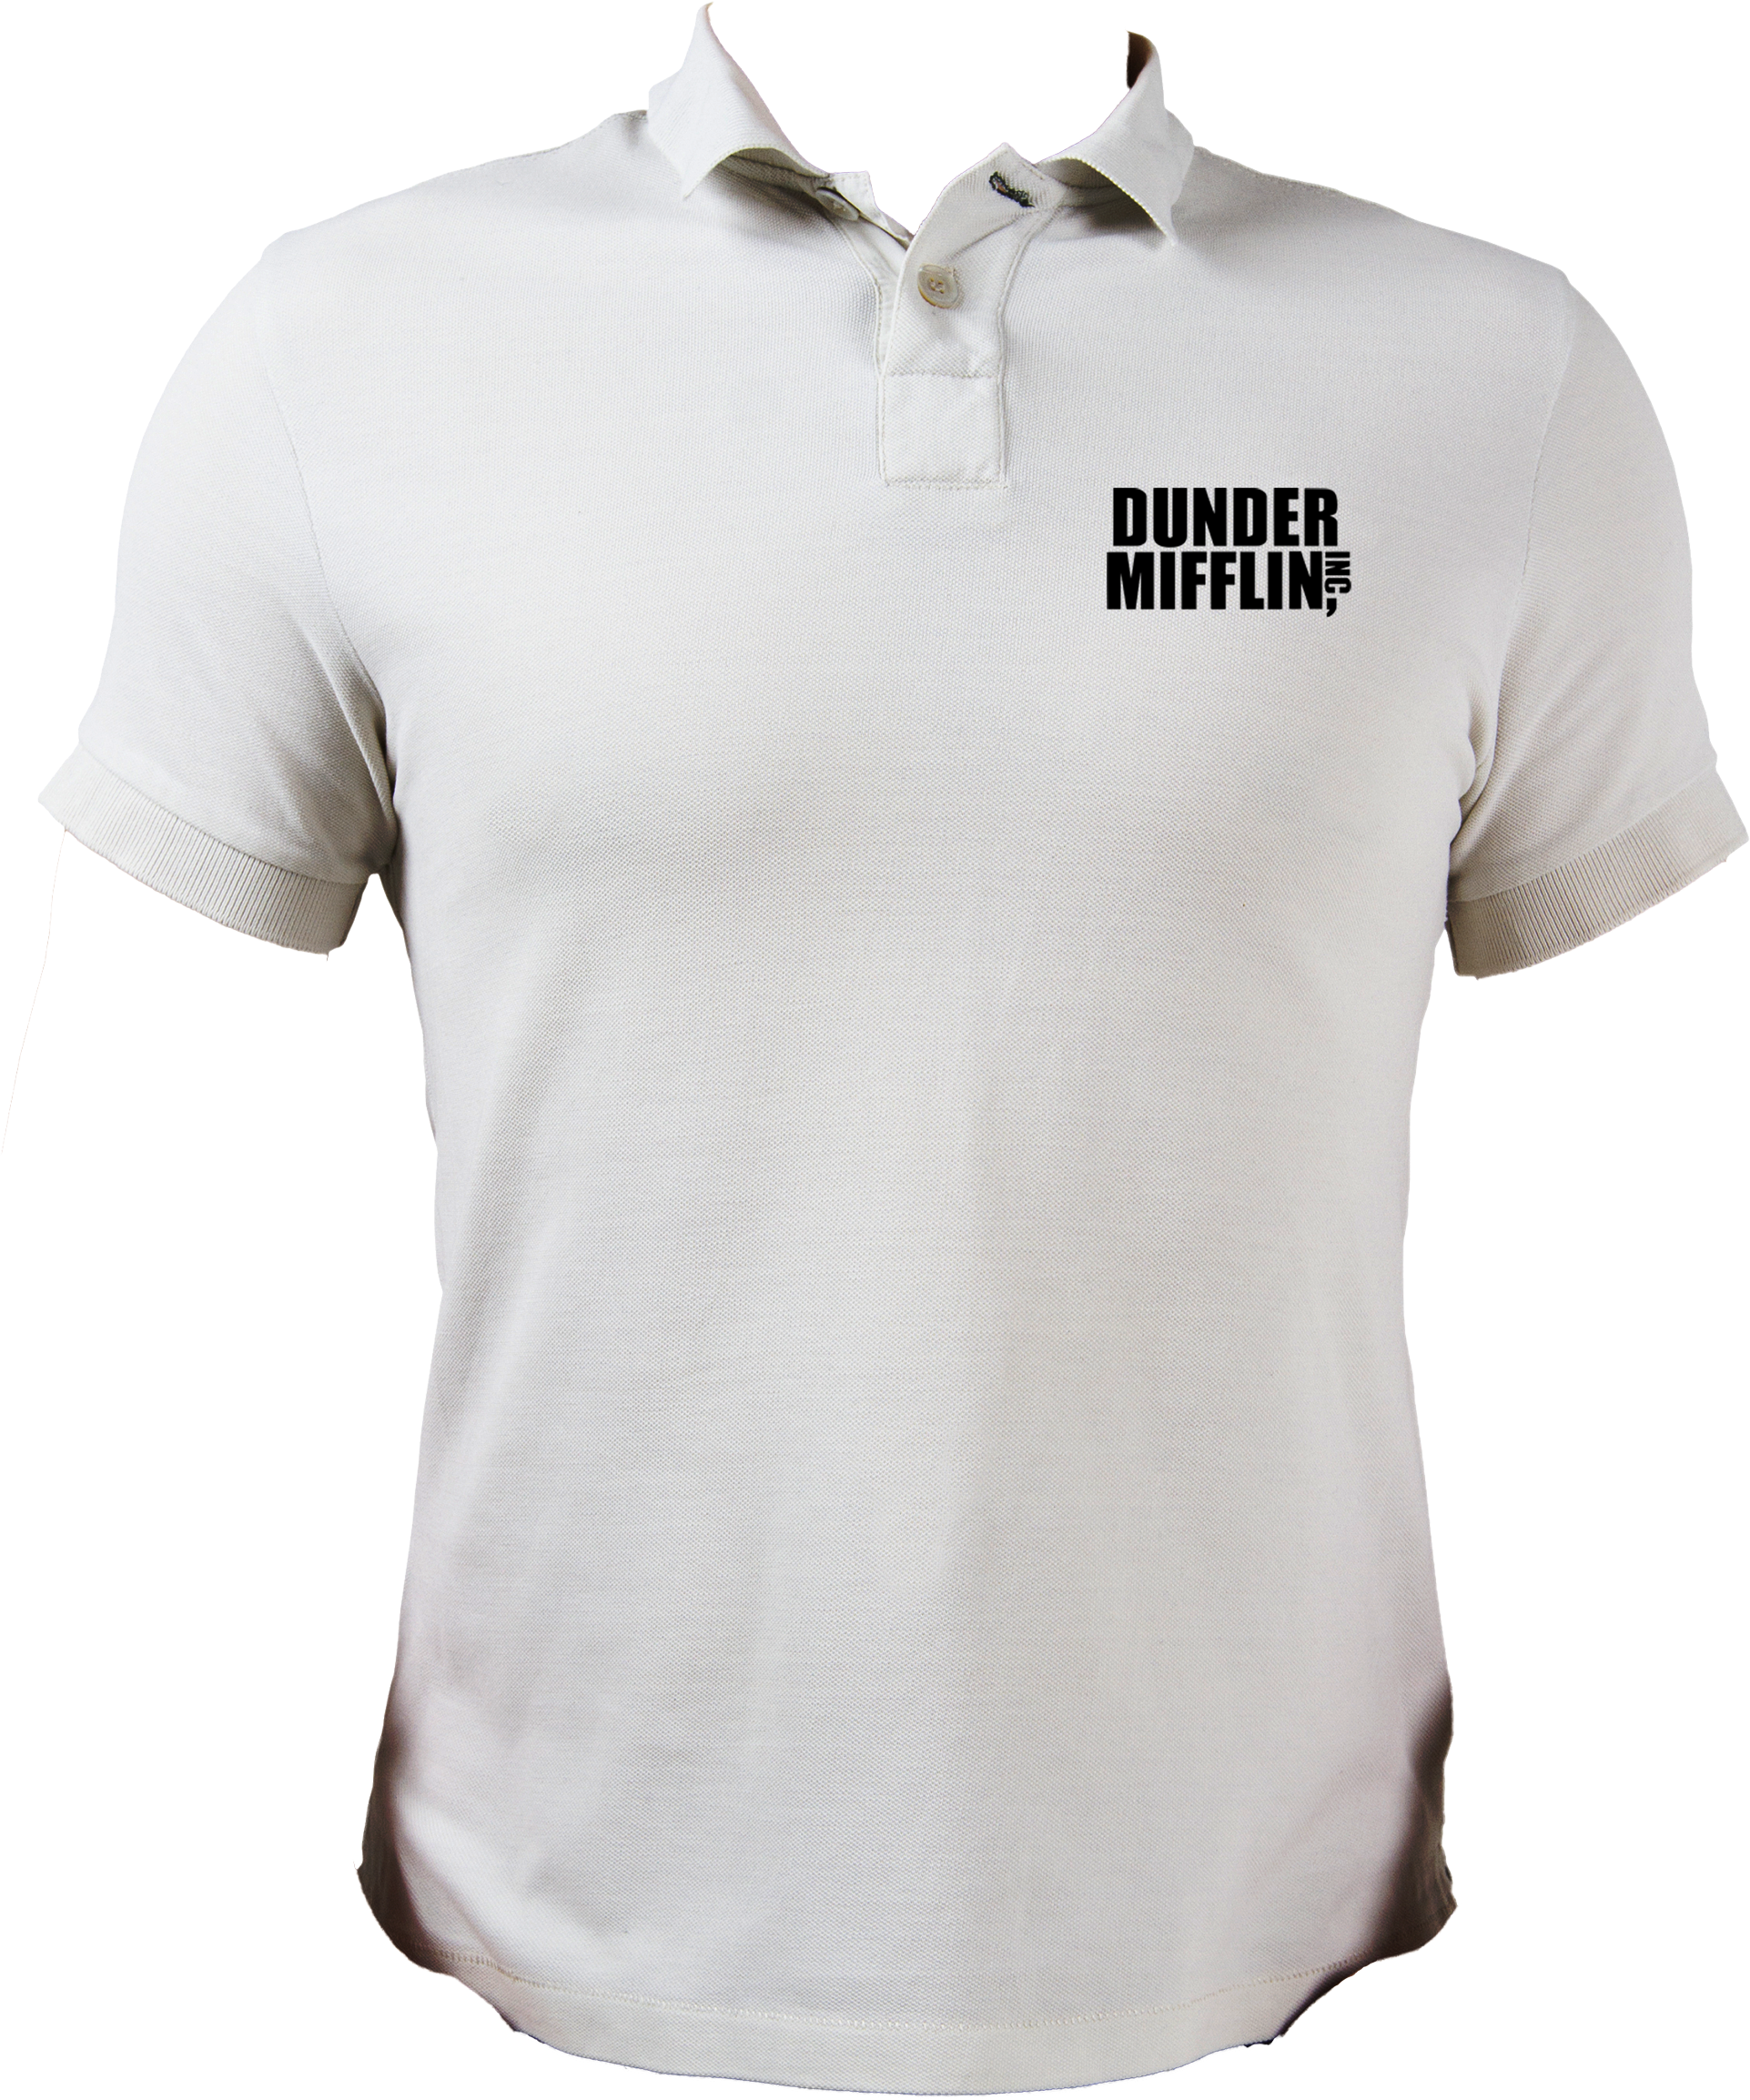 Dunder Mifflin, Inc. Paper Company - Unisex Hoodie